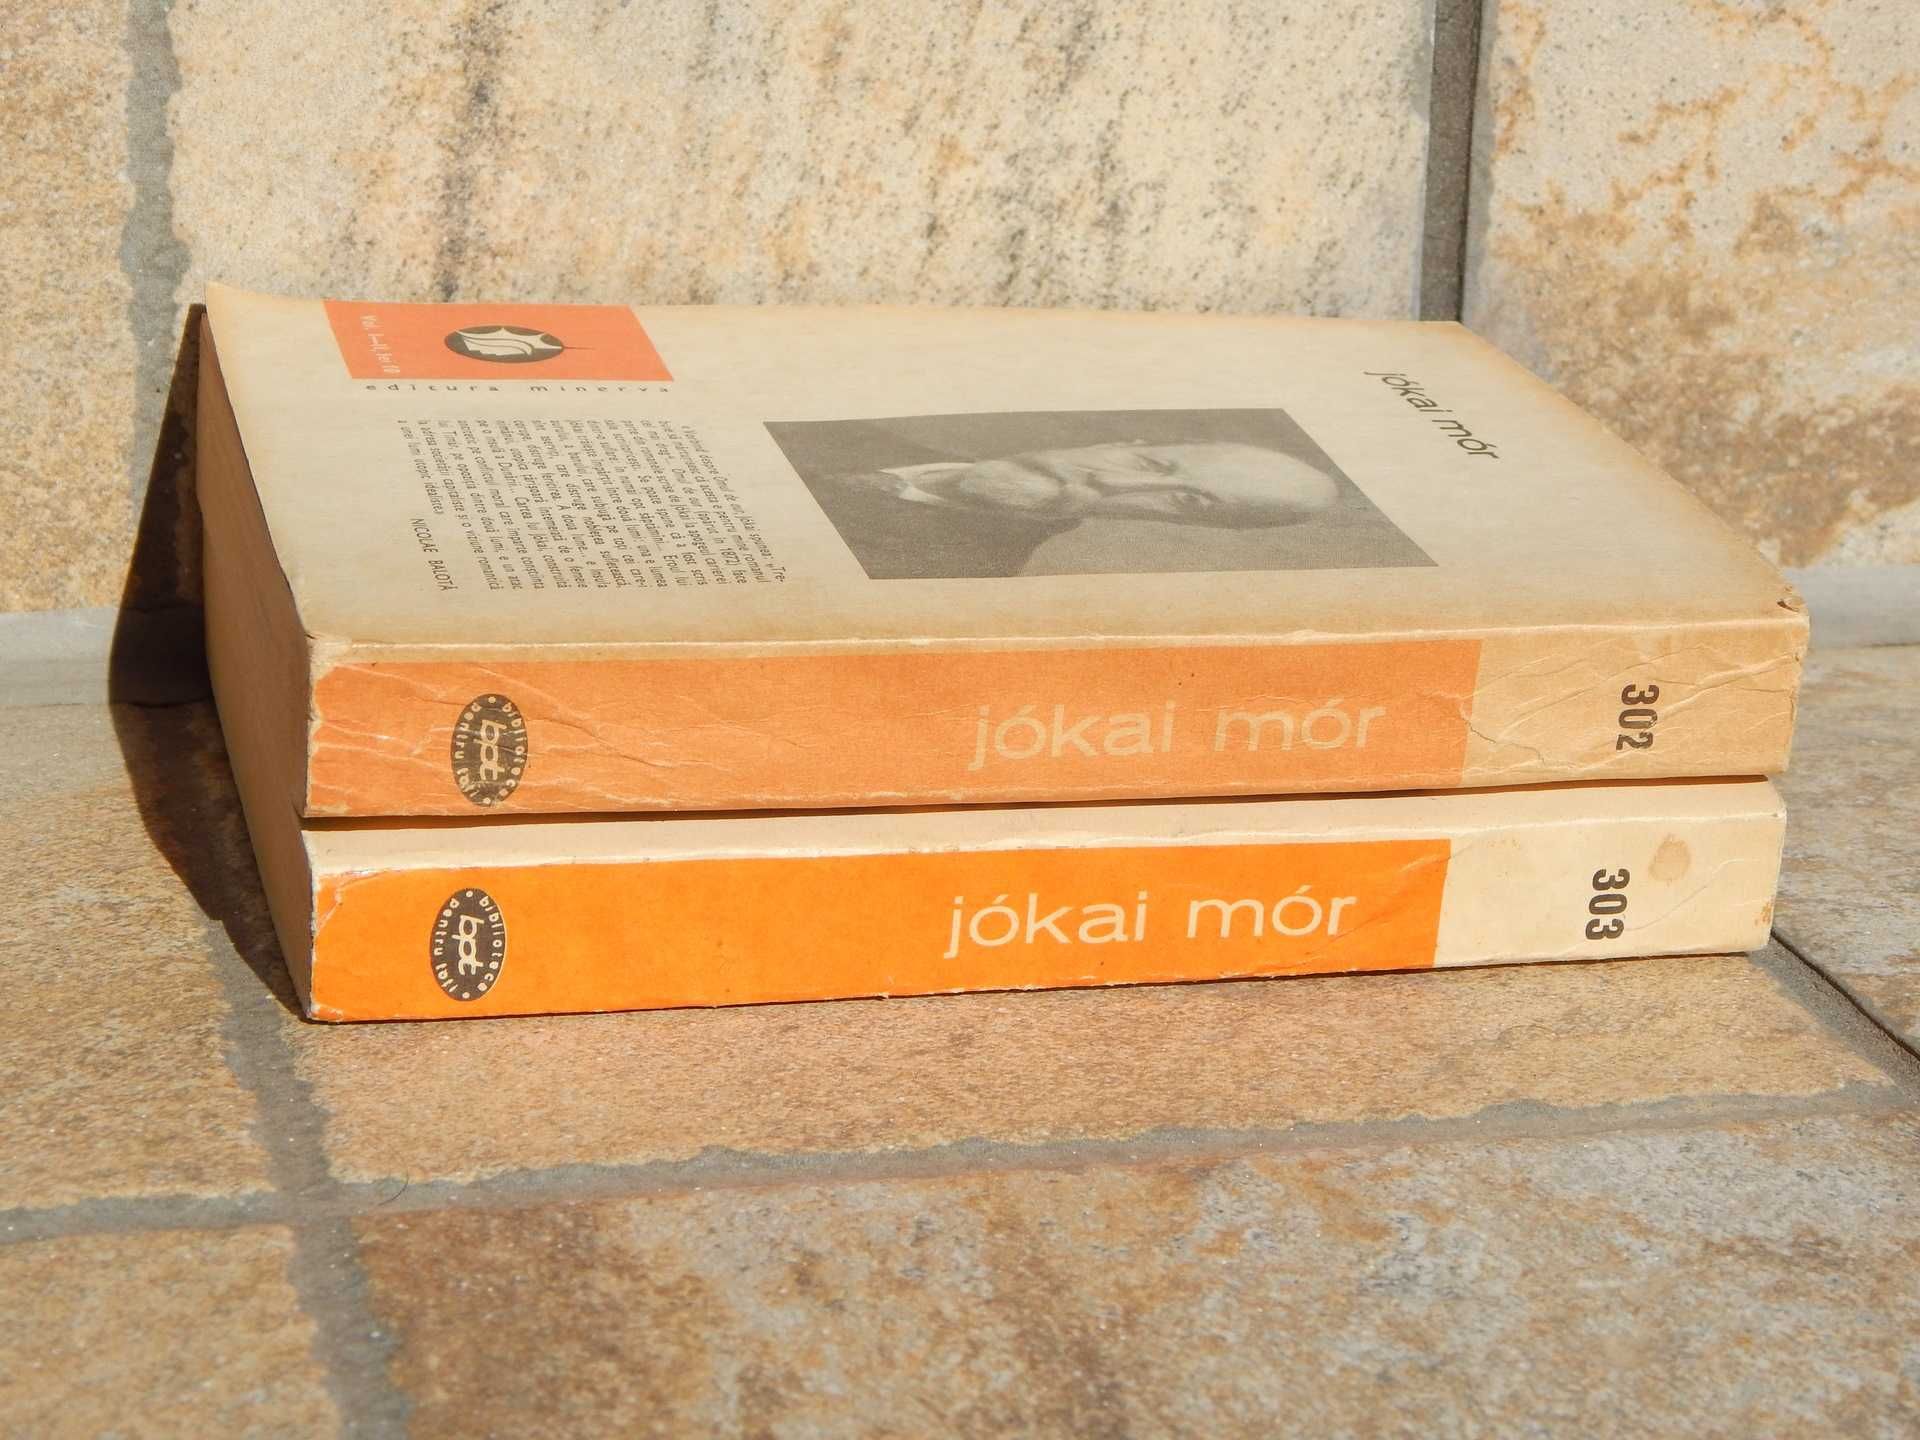 Omul de aur Jokai Mor complet 2 volume BPT Minerva 1972